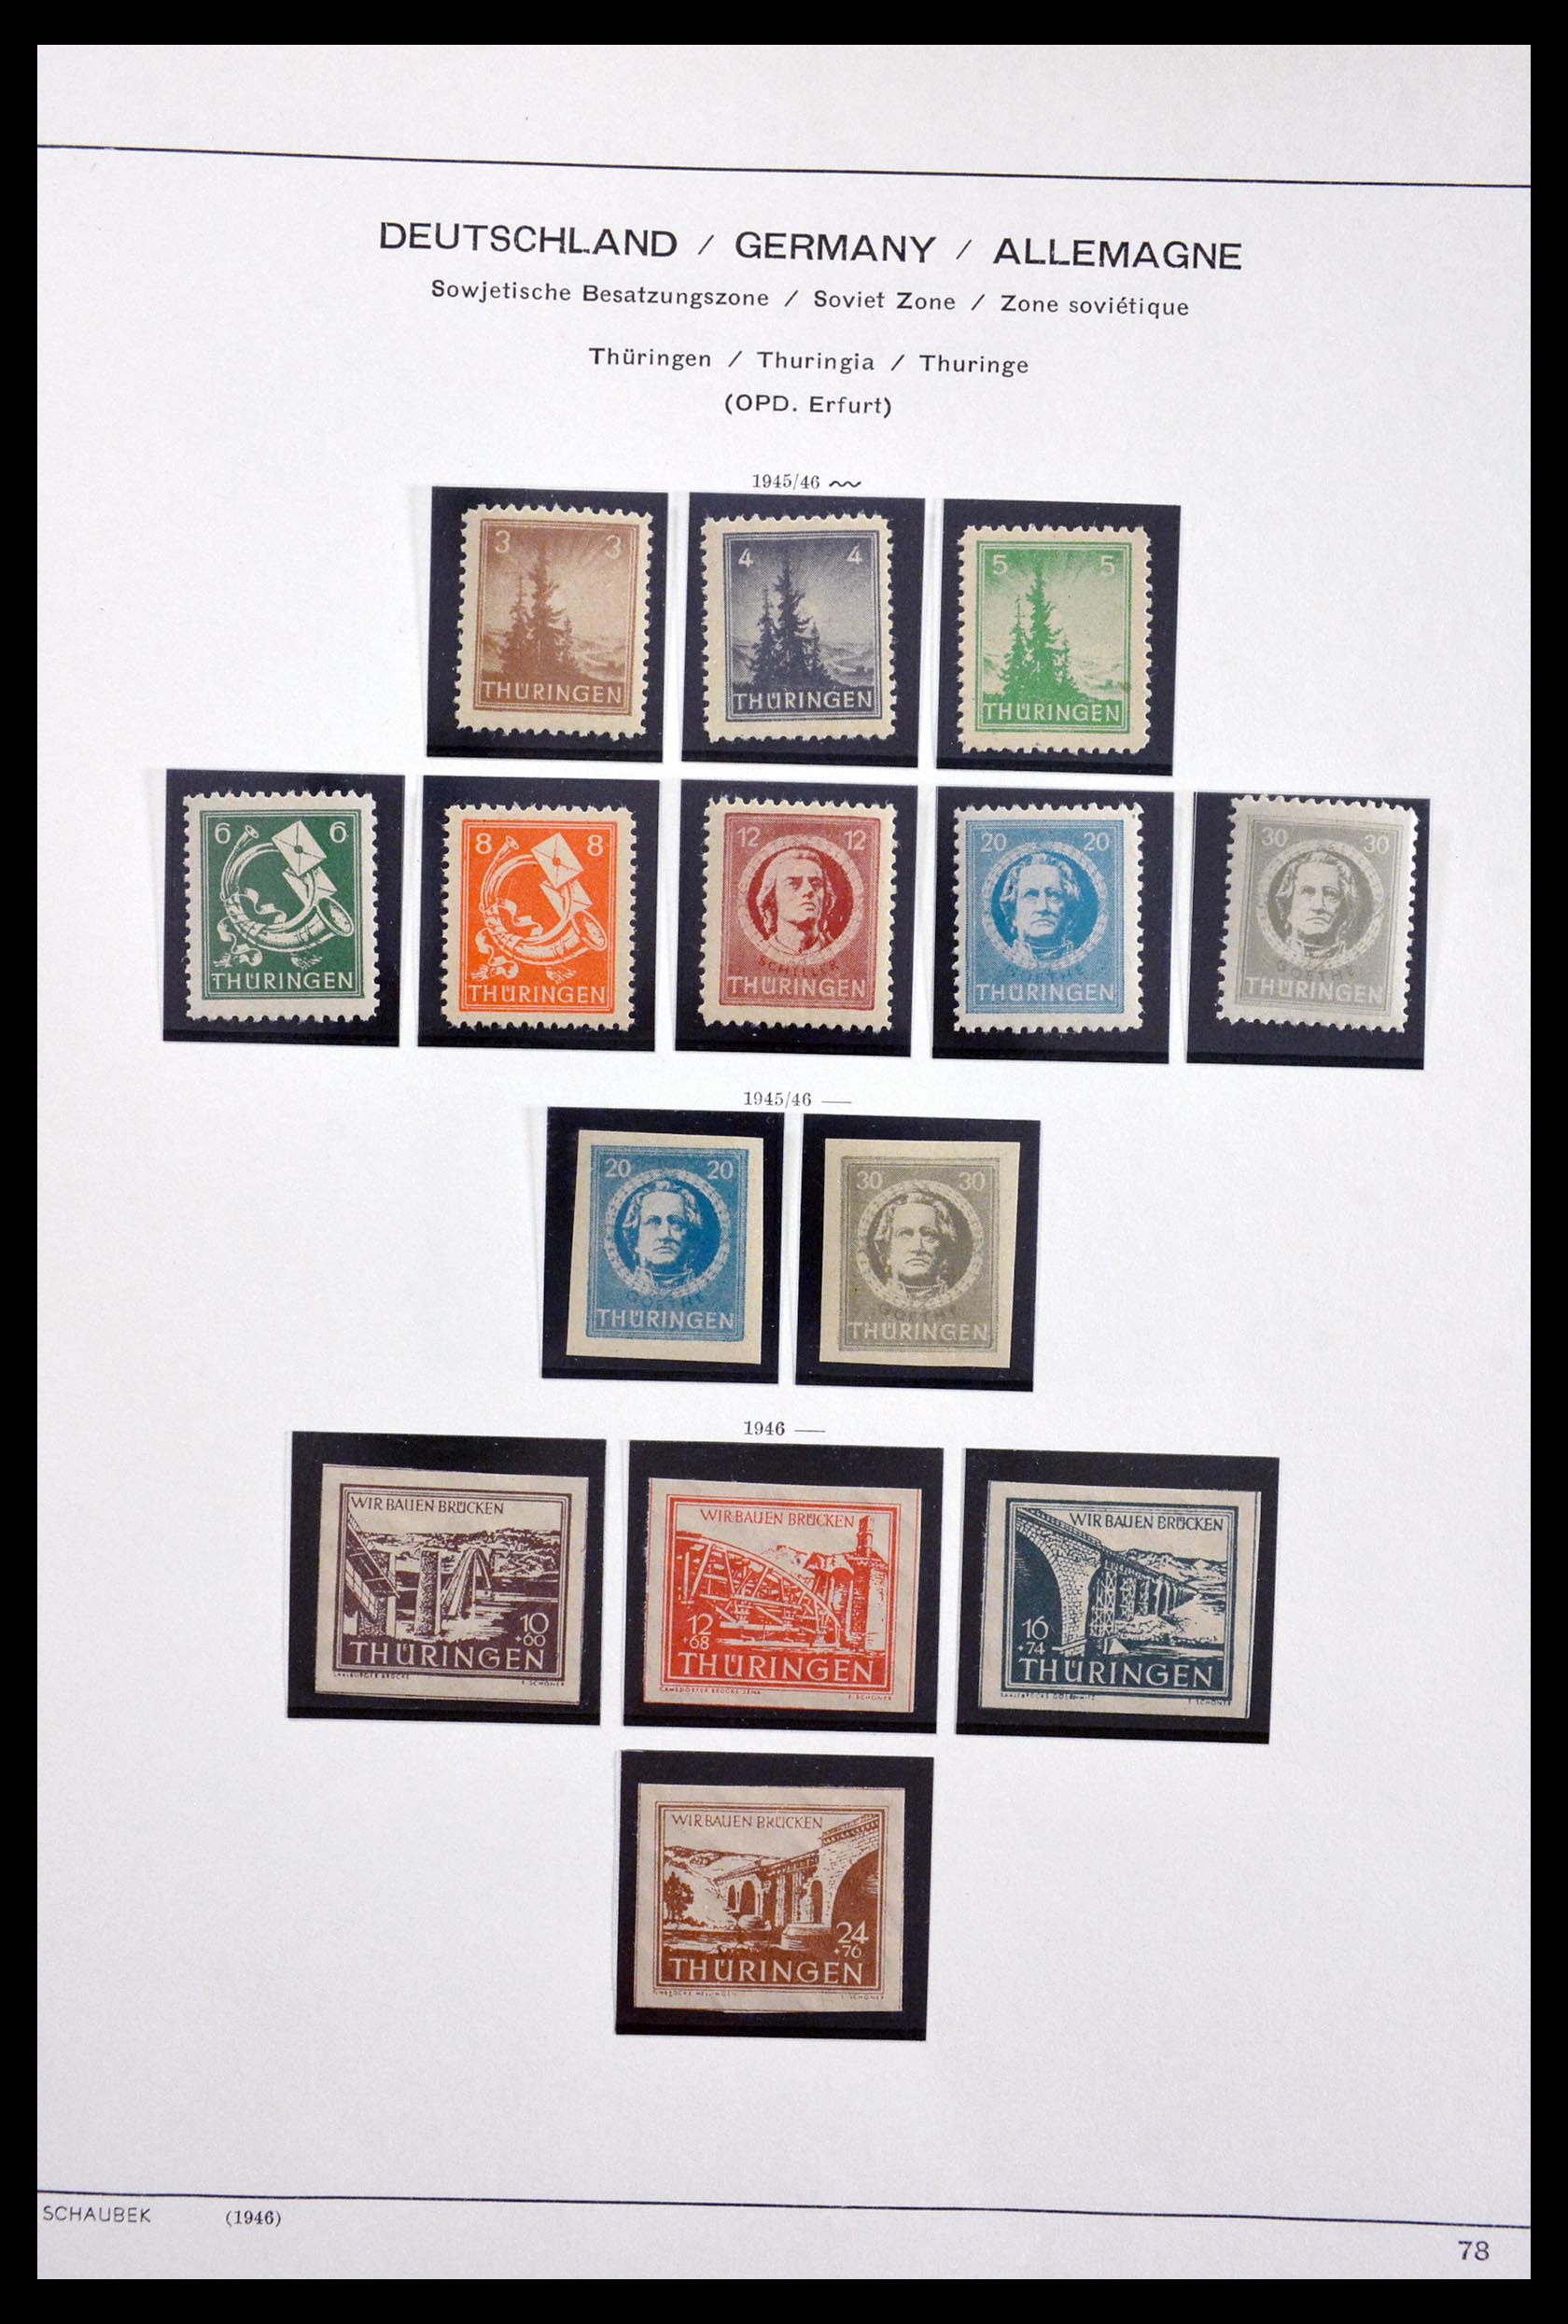 29731 019 - 29731 Local stamps Sovjetzone 1945-1949.